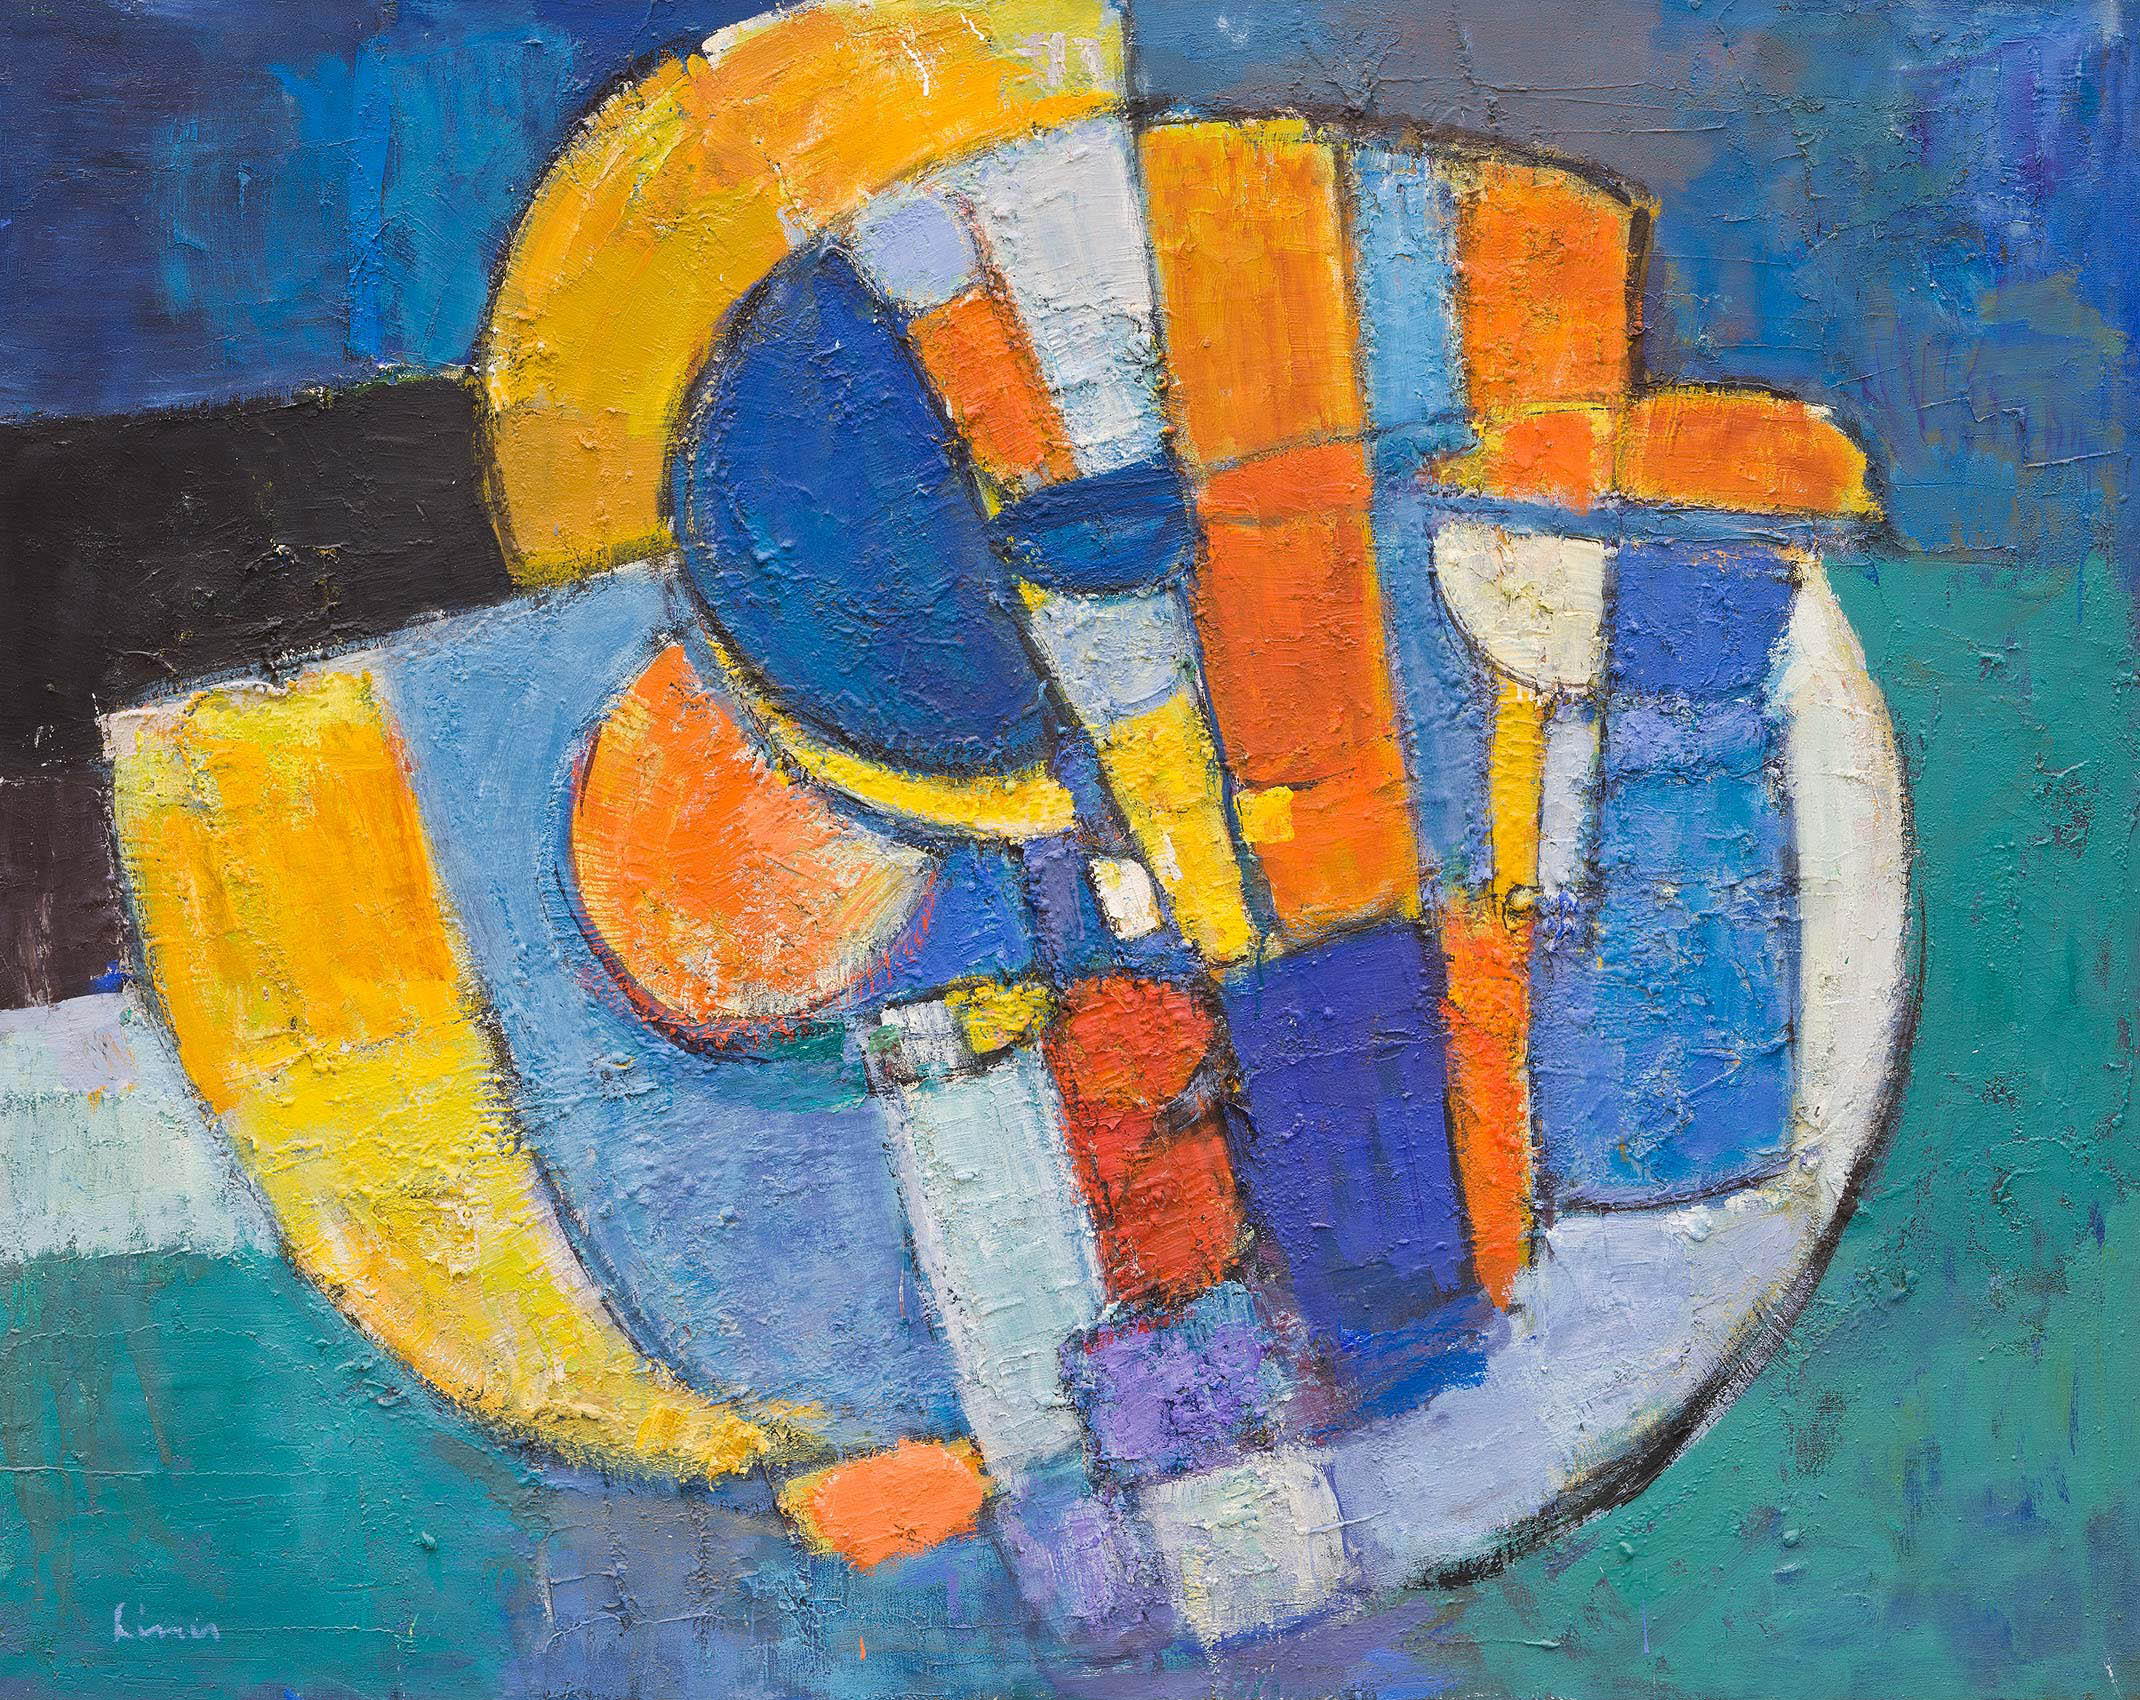 Liner Carl Walter - Grosse Komposition blau - Orange